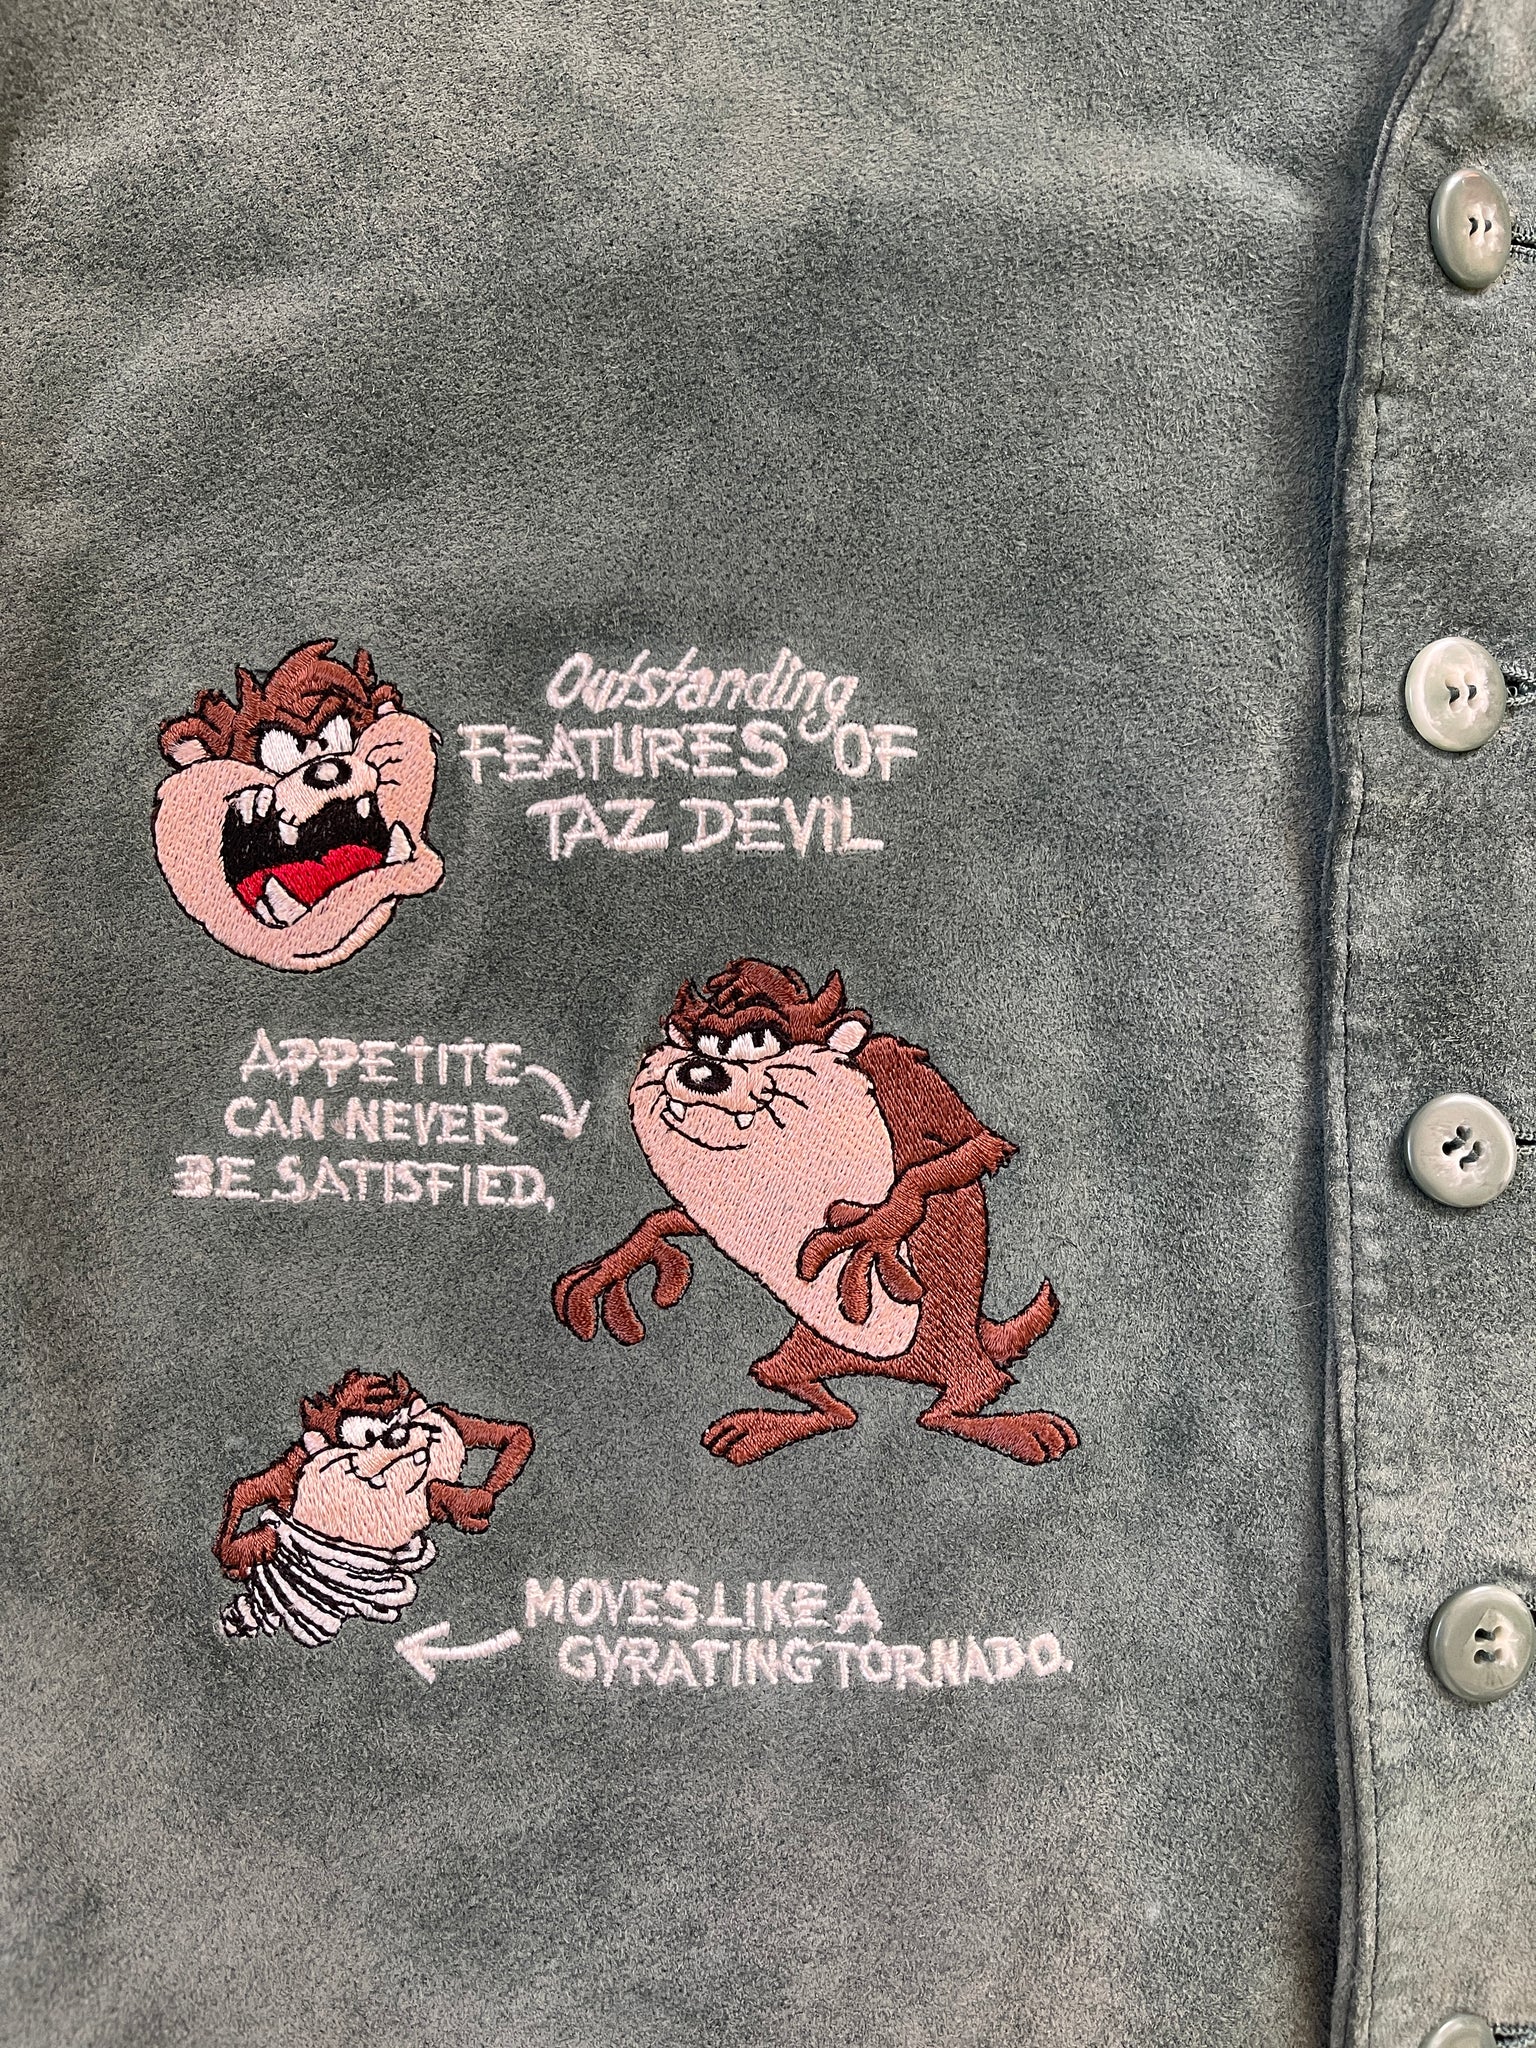 vintage looney tunes leather vest